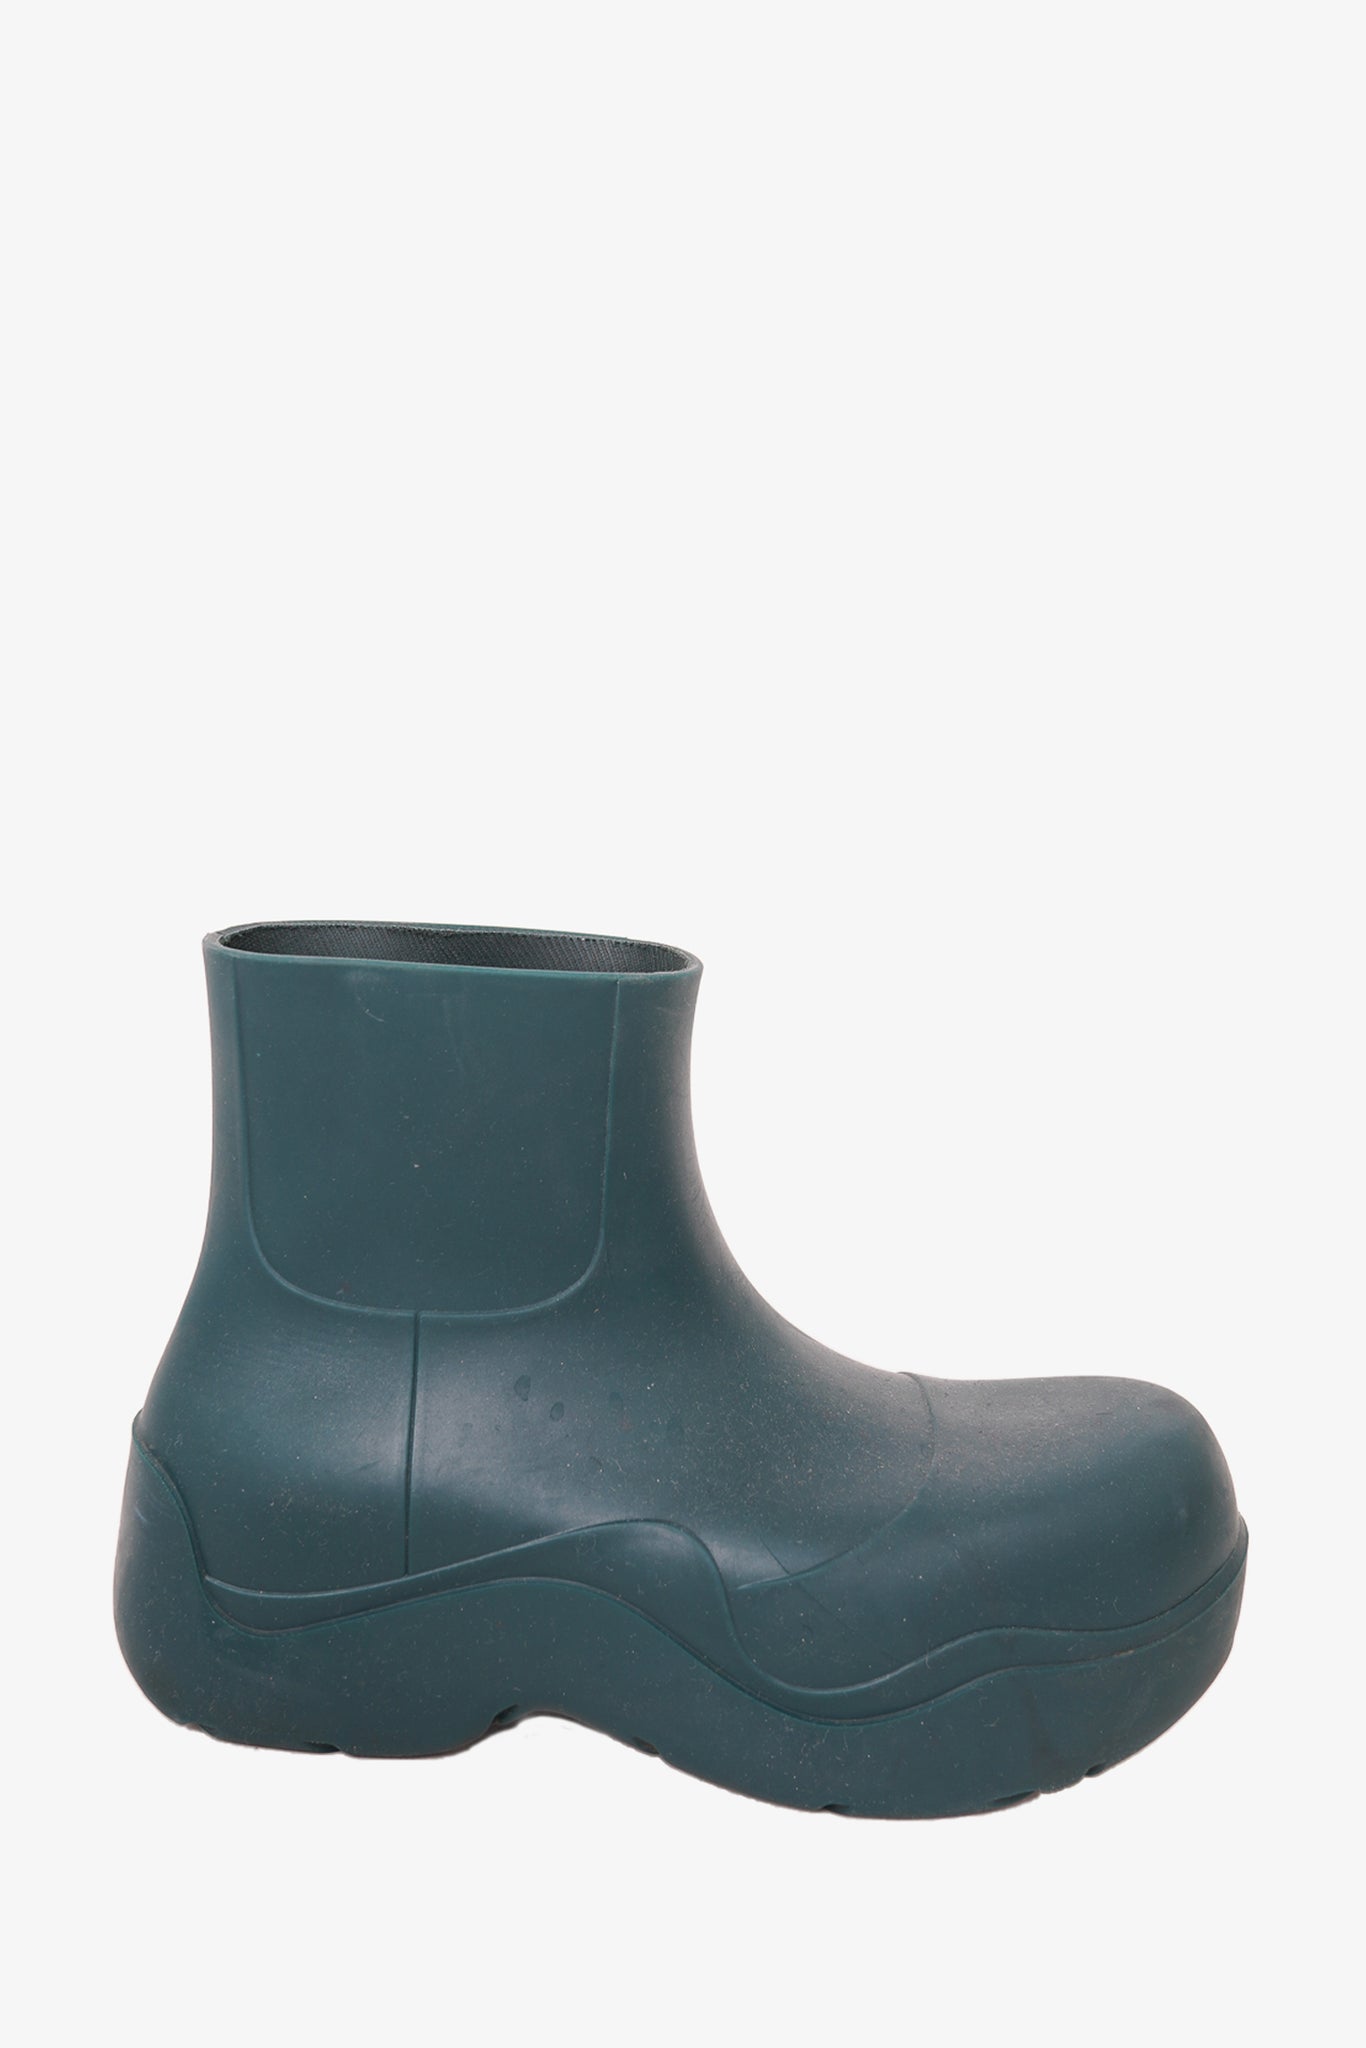 Bottega Veneta Lime Green Rubber Puddle Boots Size 41 – Mine & Yours